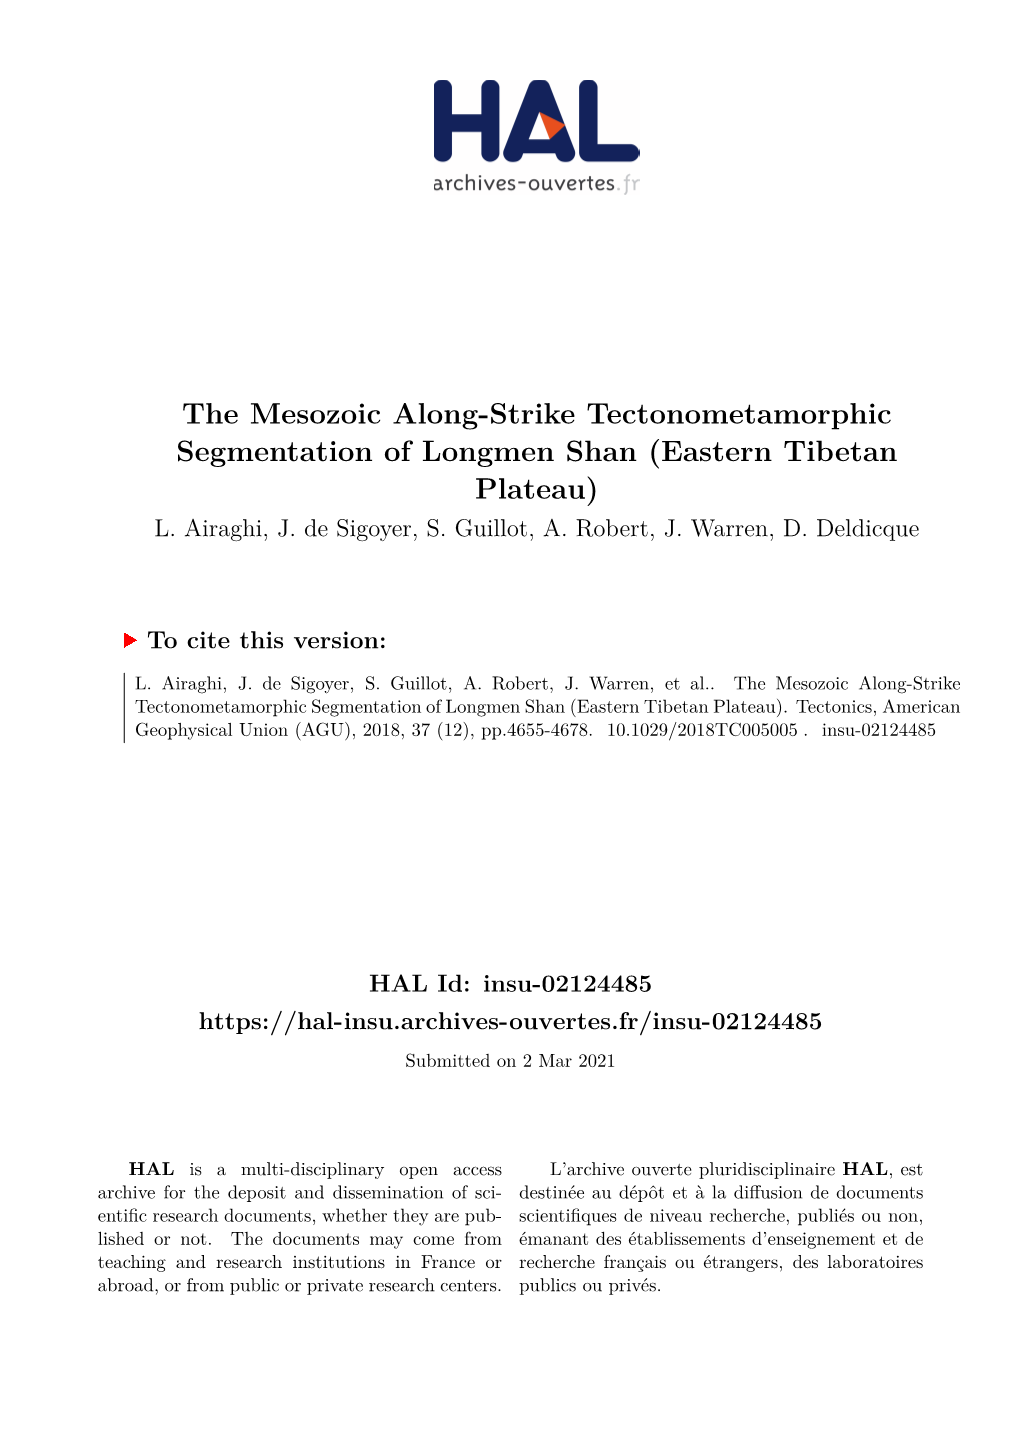 The Mesozoic Along-Strike Tectonometamorphic Segmentation of Longmen Shan (Eastern Tibetan Plateau) L